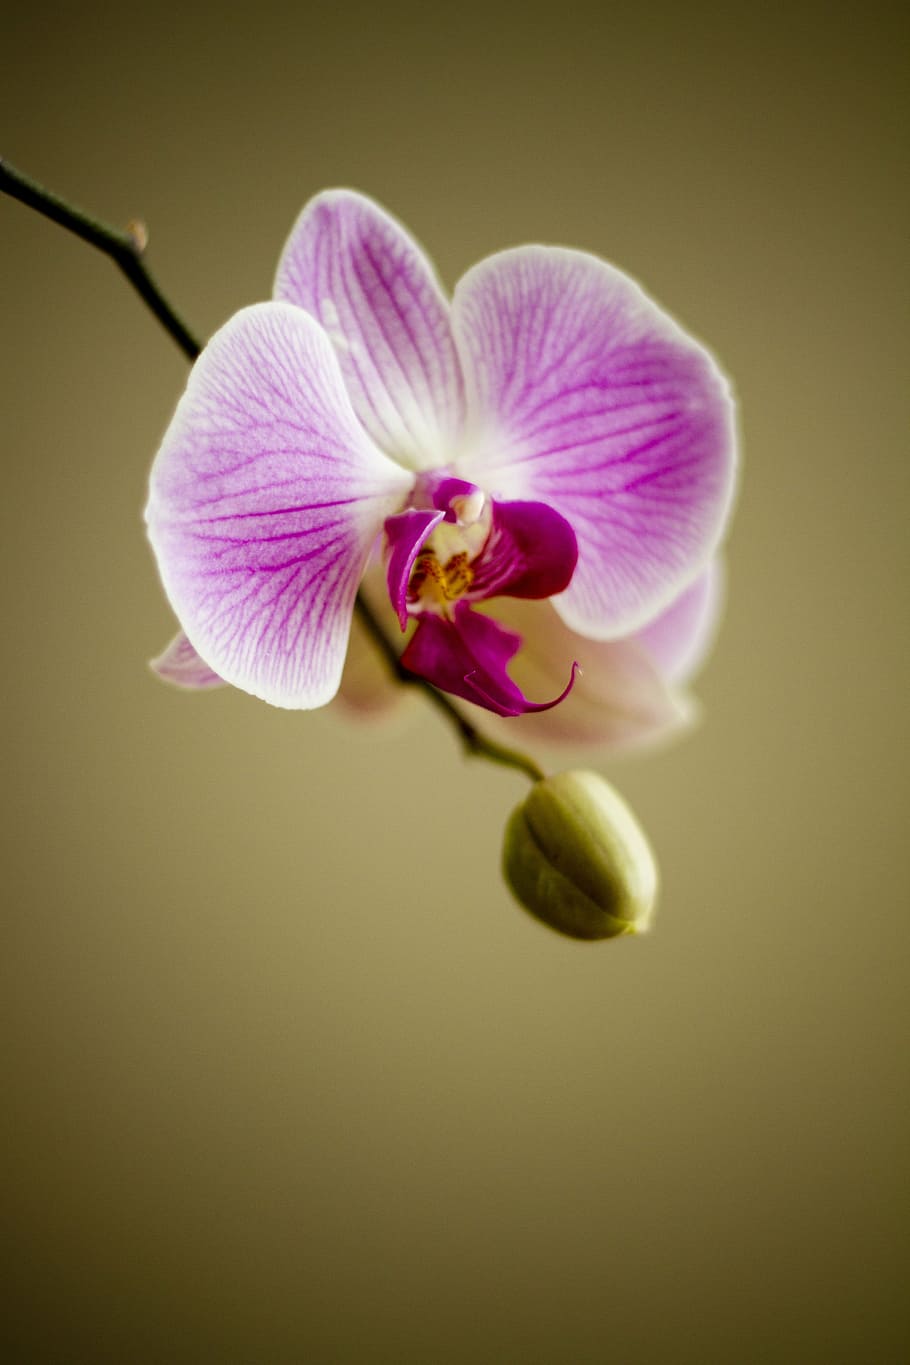 seletiva, foto de foco, roxo, orquídea, flor, flora, florista, planta, adorável, natureza